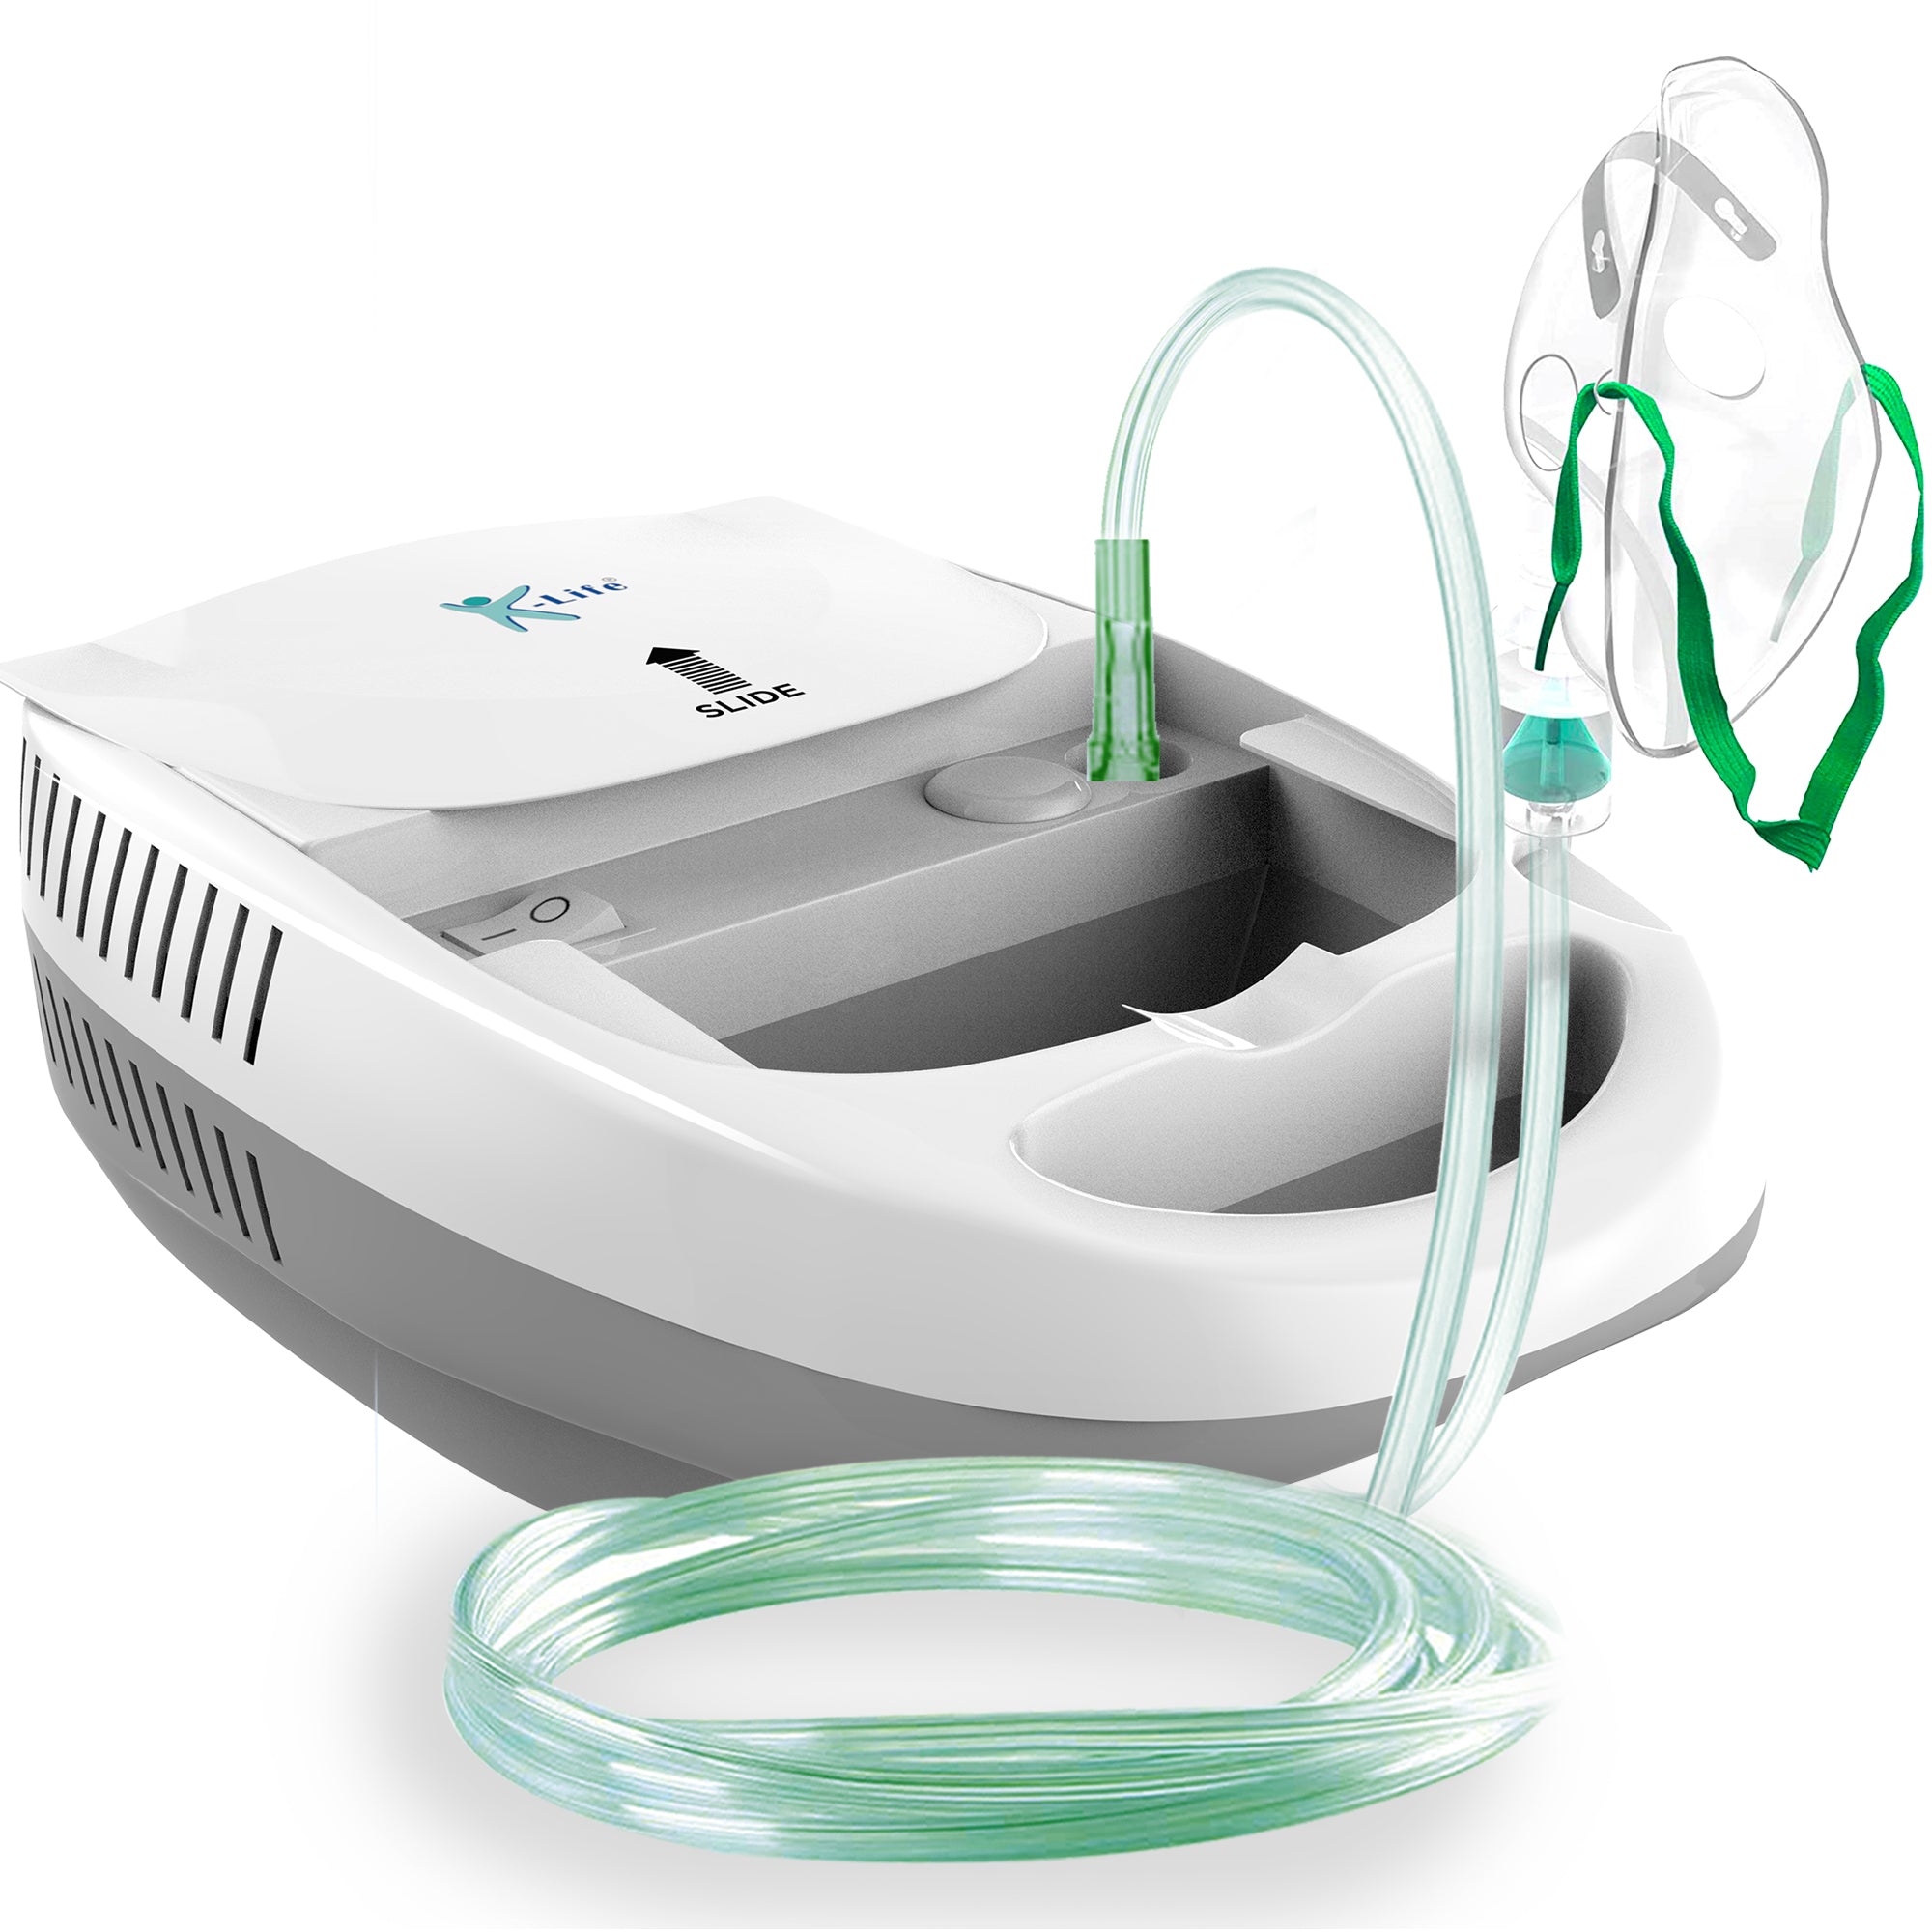 K-life 108 Steam Respiratory Machine Kit For Baby Adults kids Asthma Inhaler Patients Nebulizer